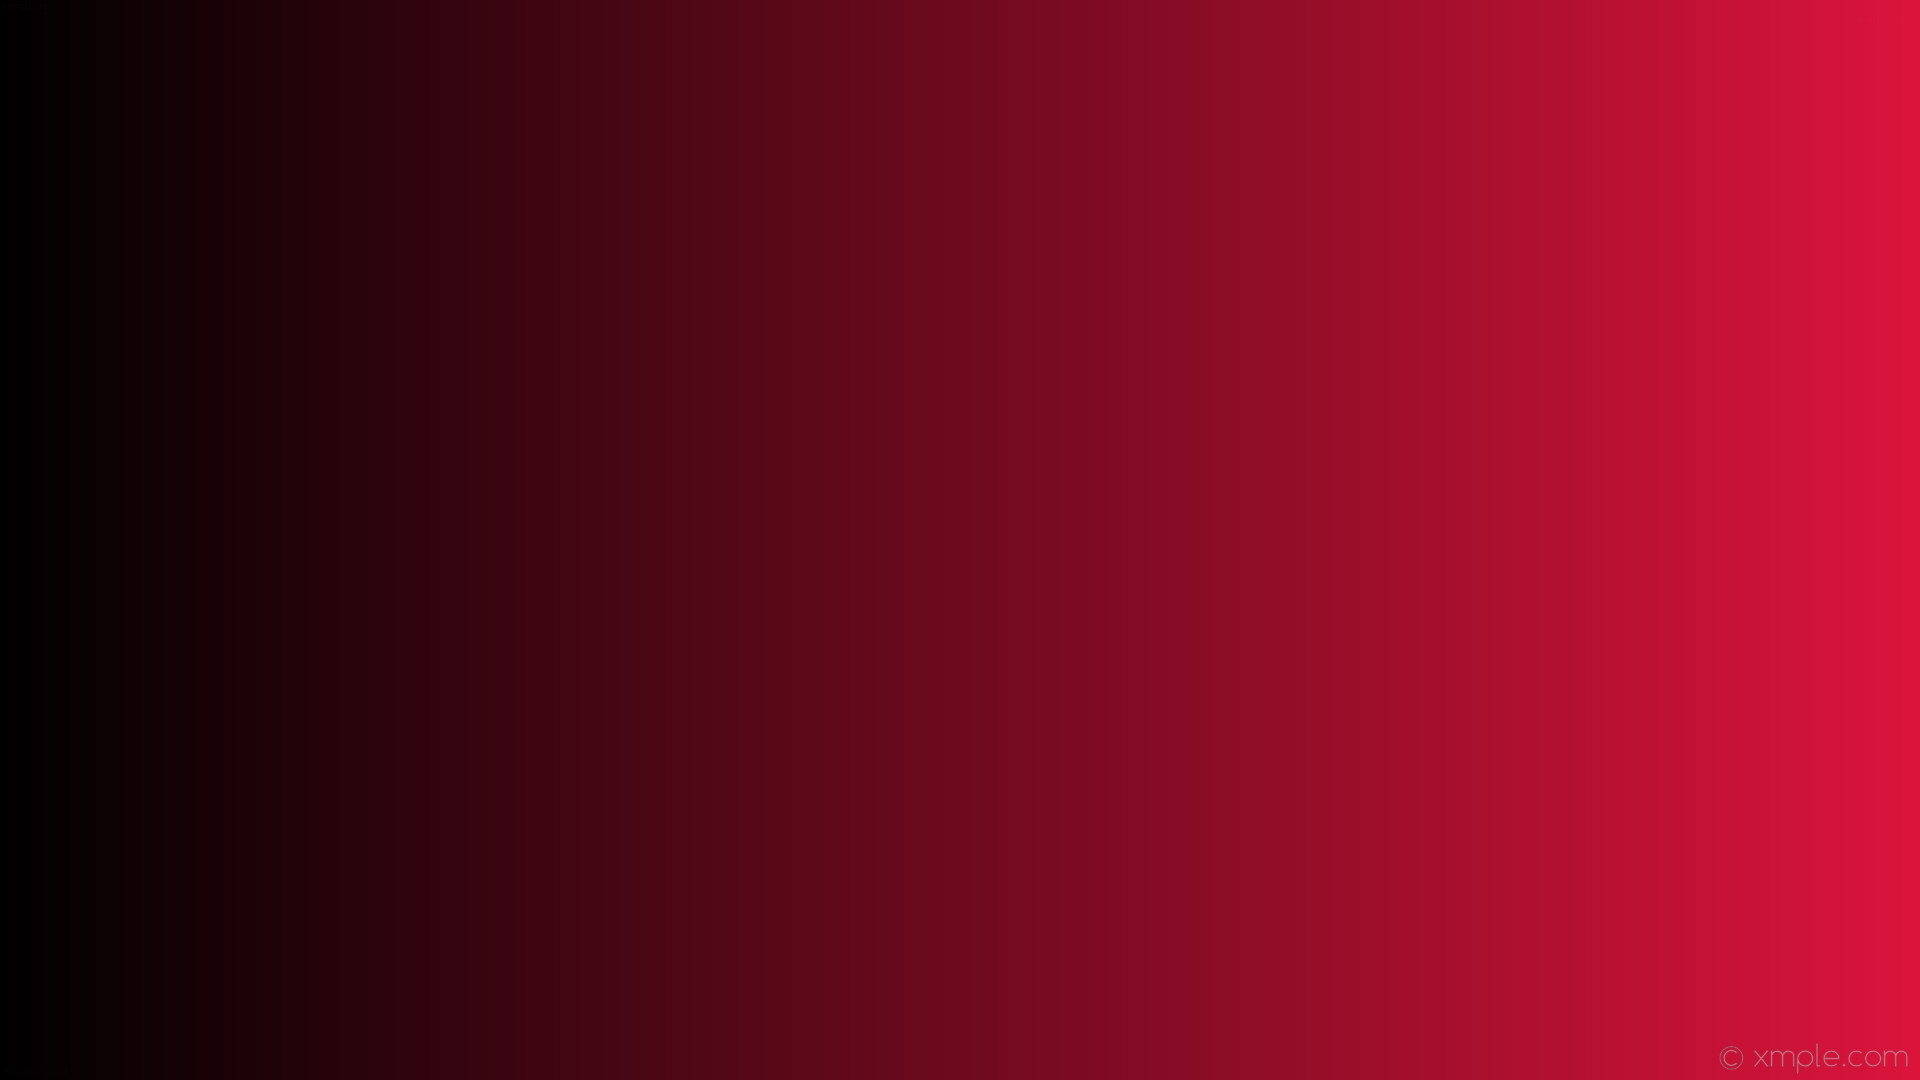 1920x1080 wallpaper gradient black red linear crimson #000000 #dc143c 180Â°